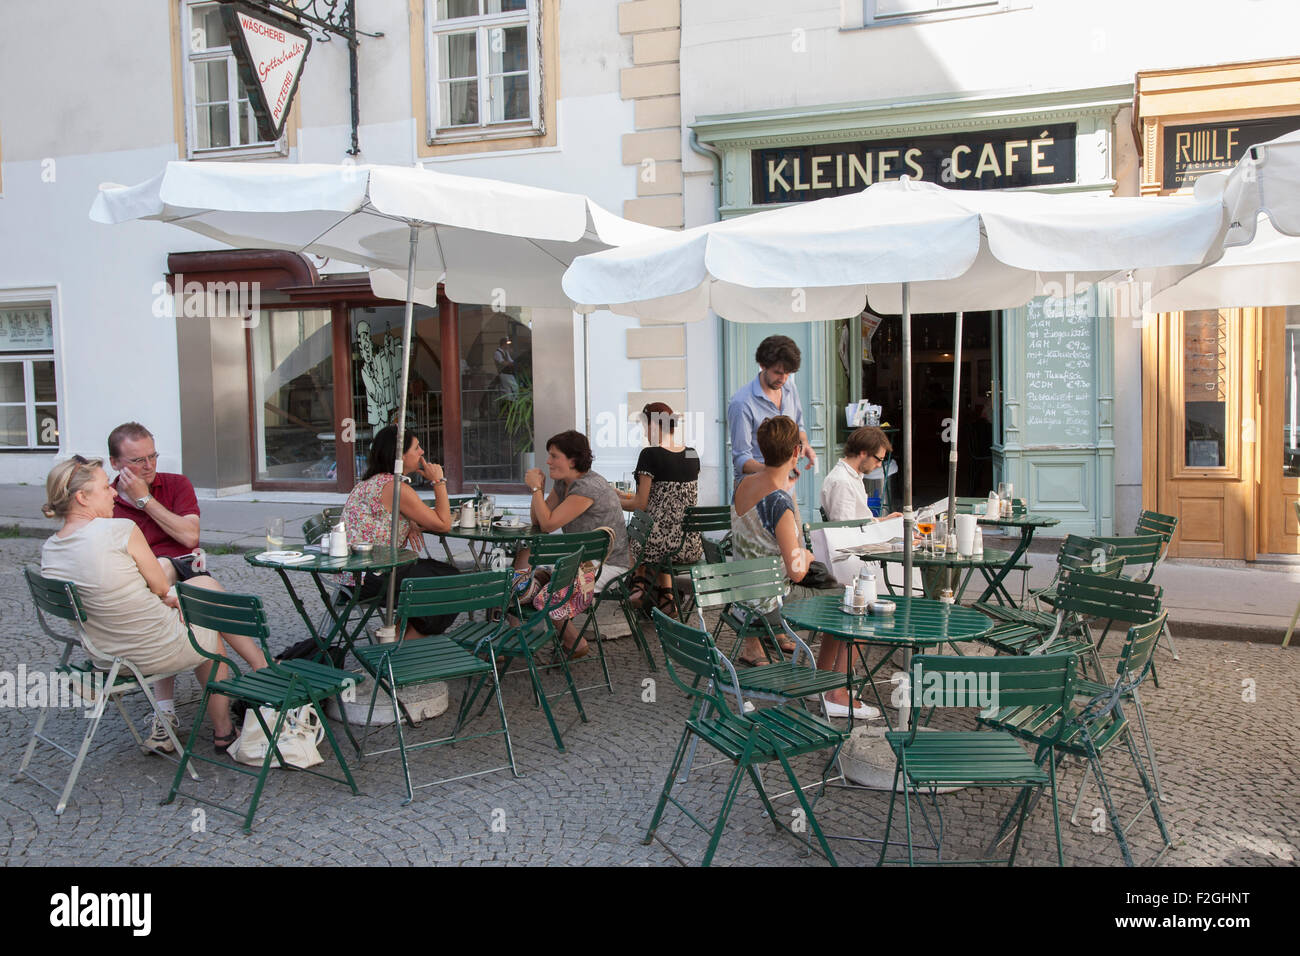 Kleines Cafe, Franziskanerplatz Square, Vienna, Austria Stock Photo